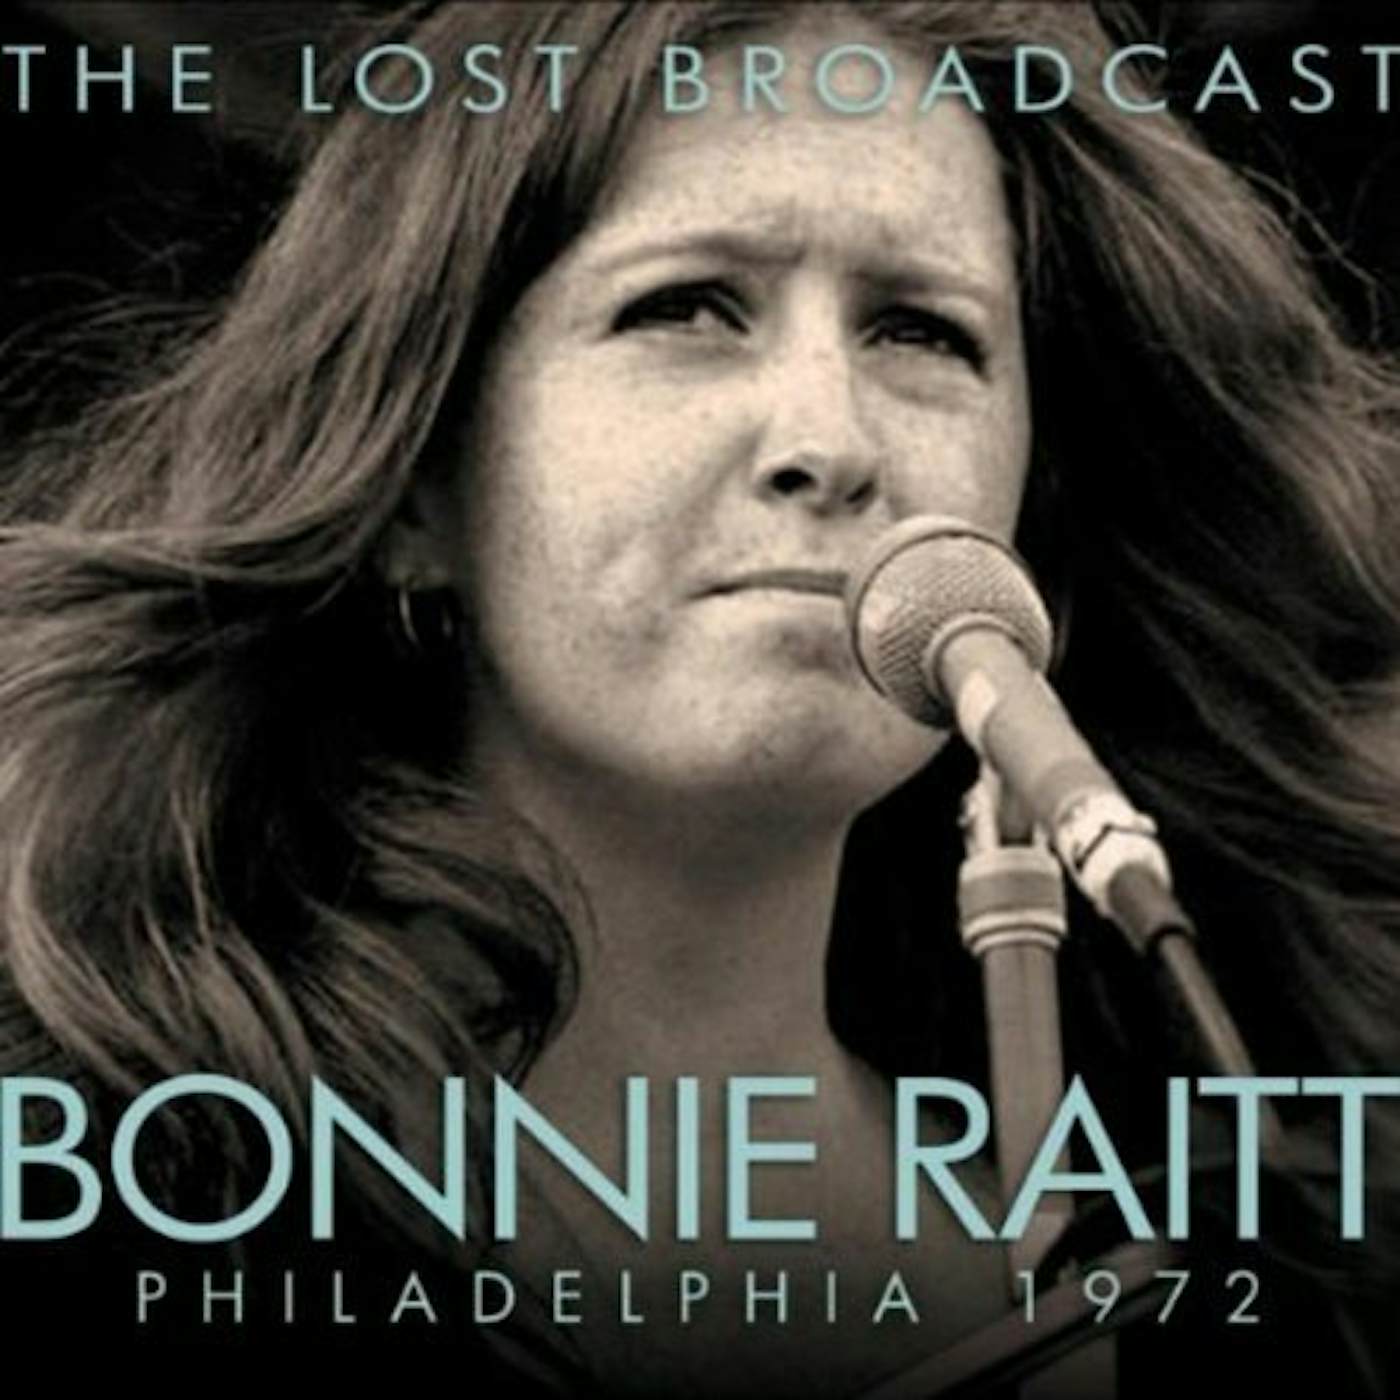 Bonnie Raitt LOST BROADCAST-PHILADELPHIA 1972 Vinyl Record - Limited Edition, 180 Gram Pressing